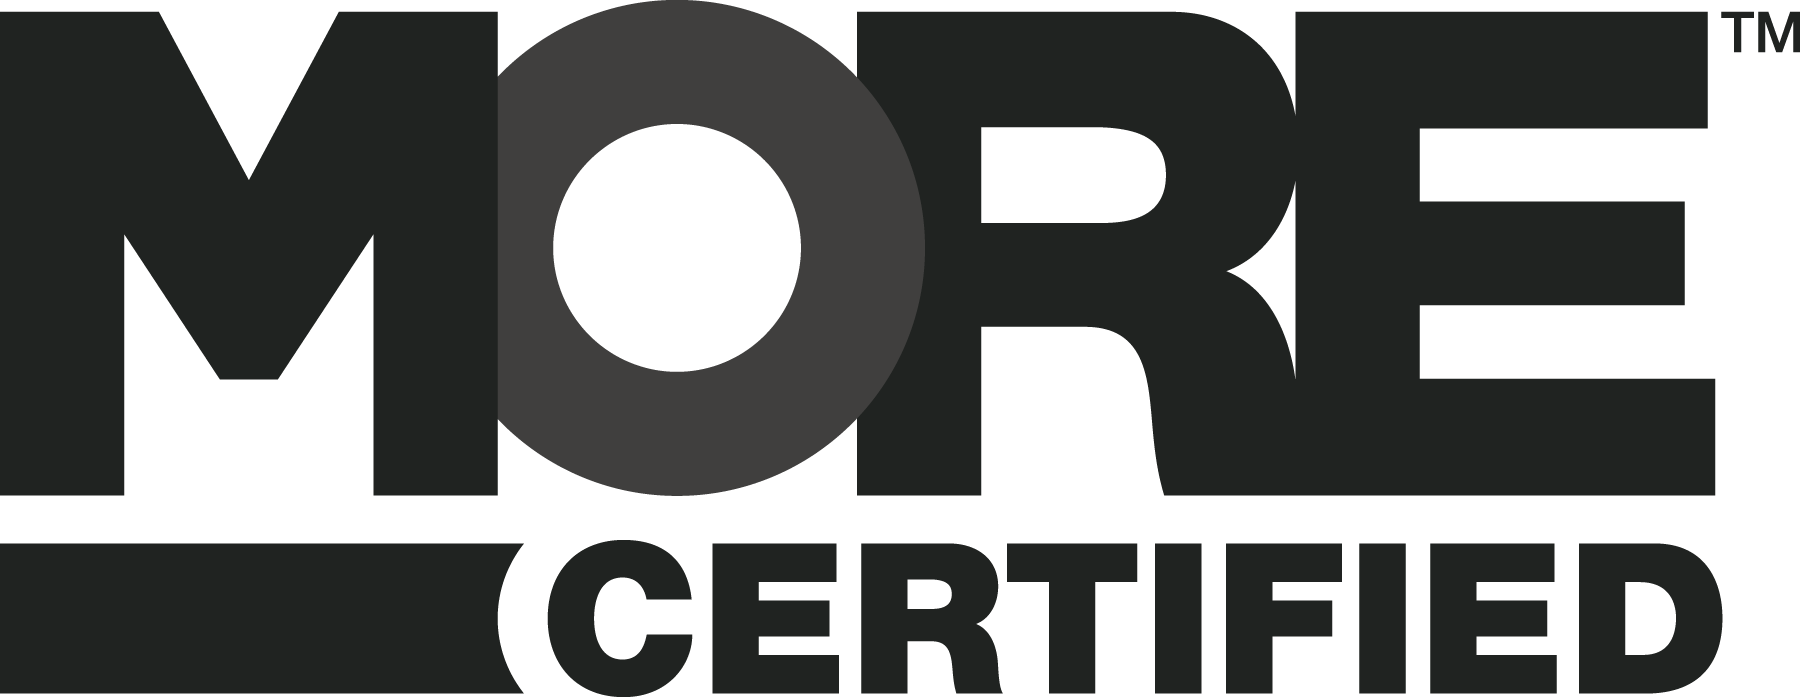 Q4i MORE Certified Logo TM